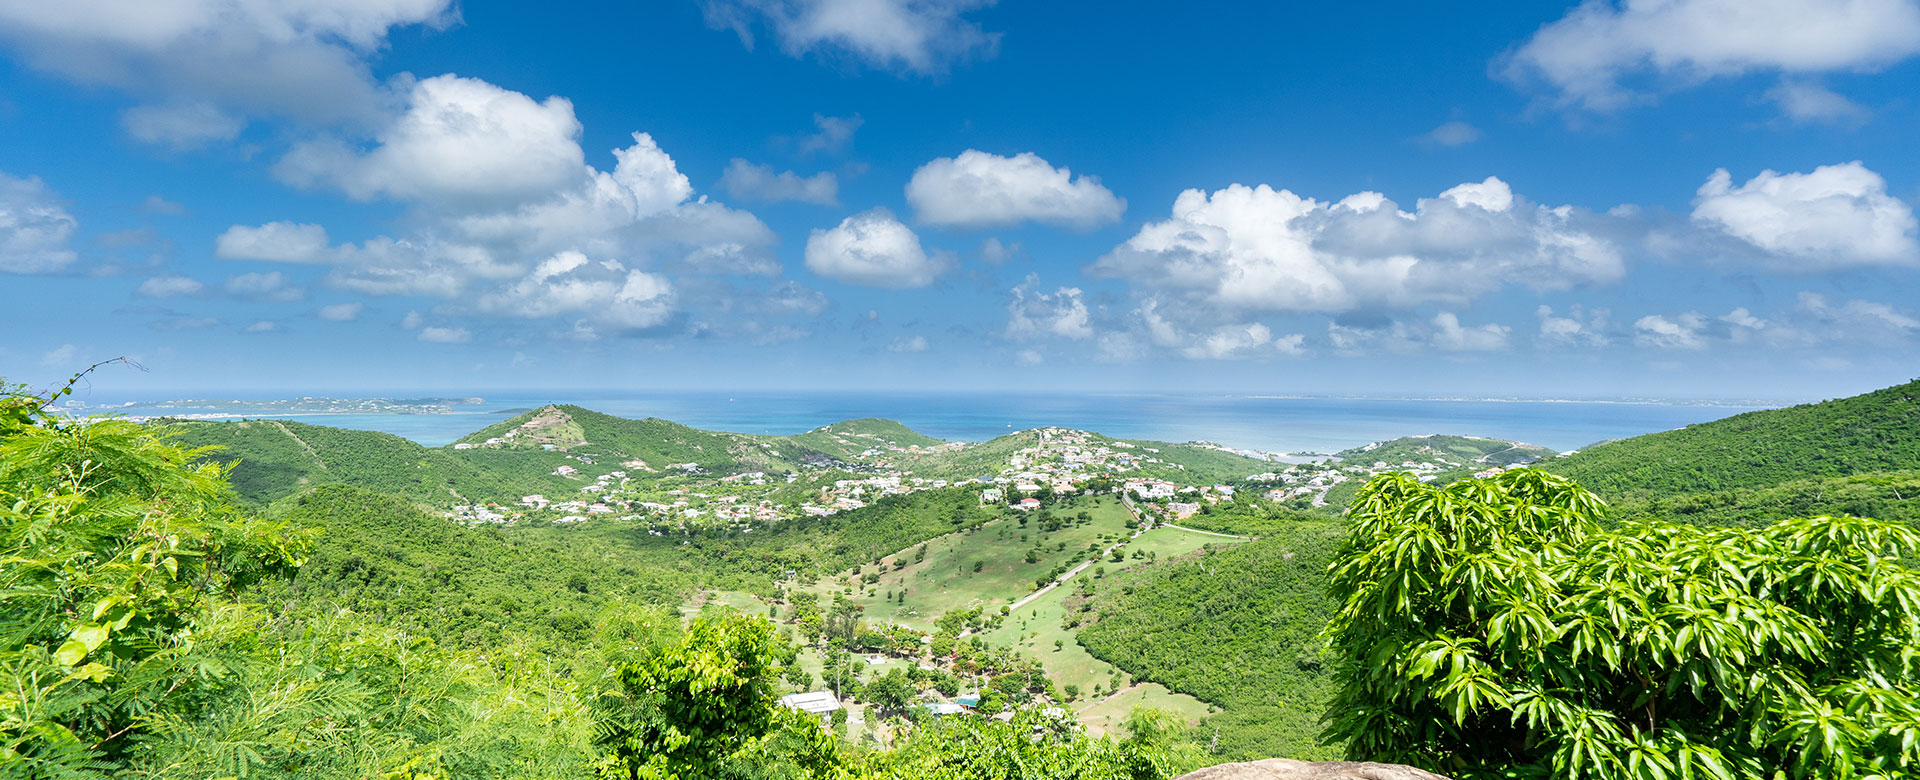 Get Off the Beaten Path: Exploring St. Maarten/St. Martin’s Unspoiled Nature